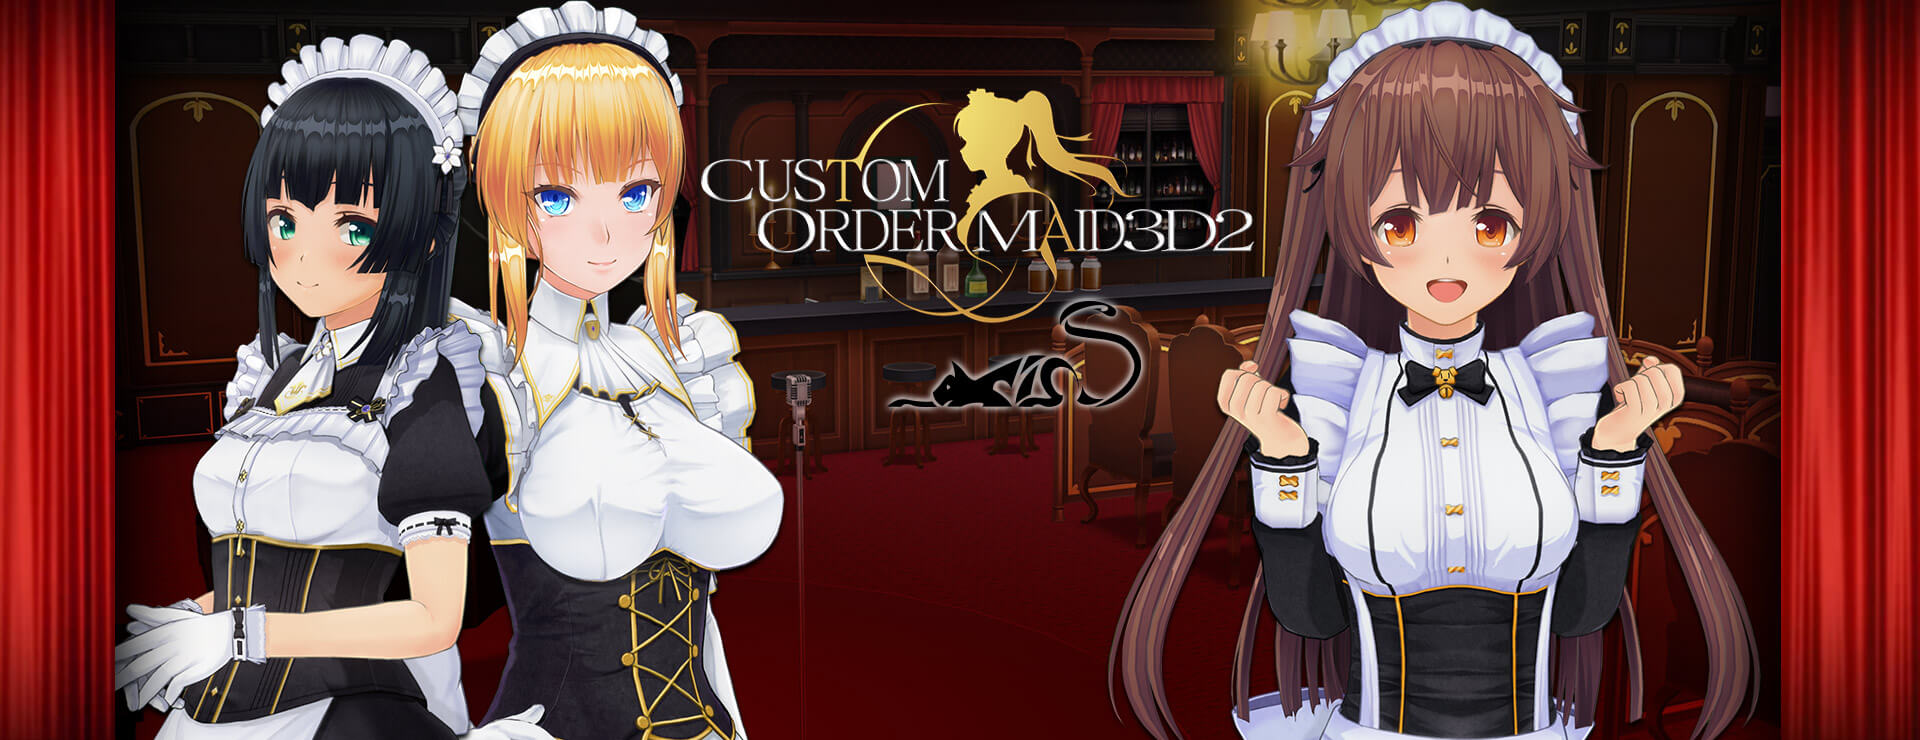 Custom Order Maid 3D2 Enjoy Empire Life GP-01 Bundle - Simulation Game